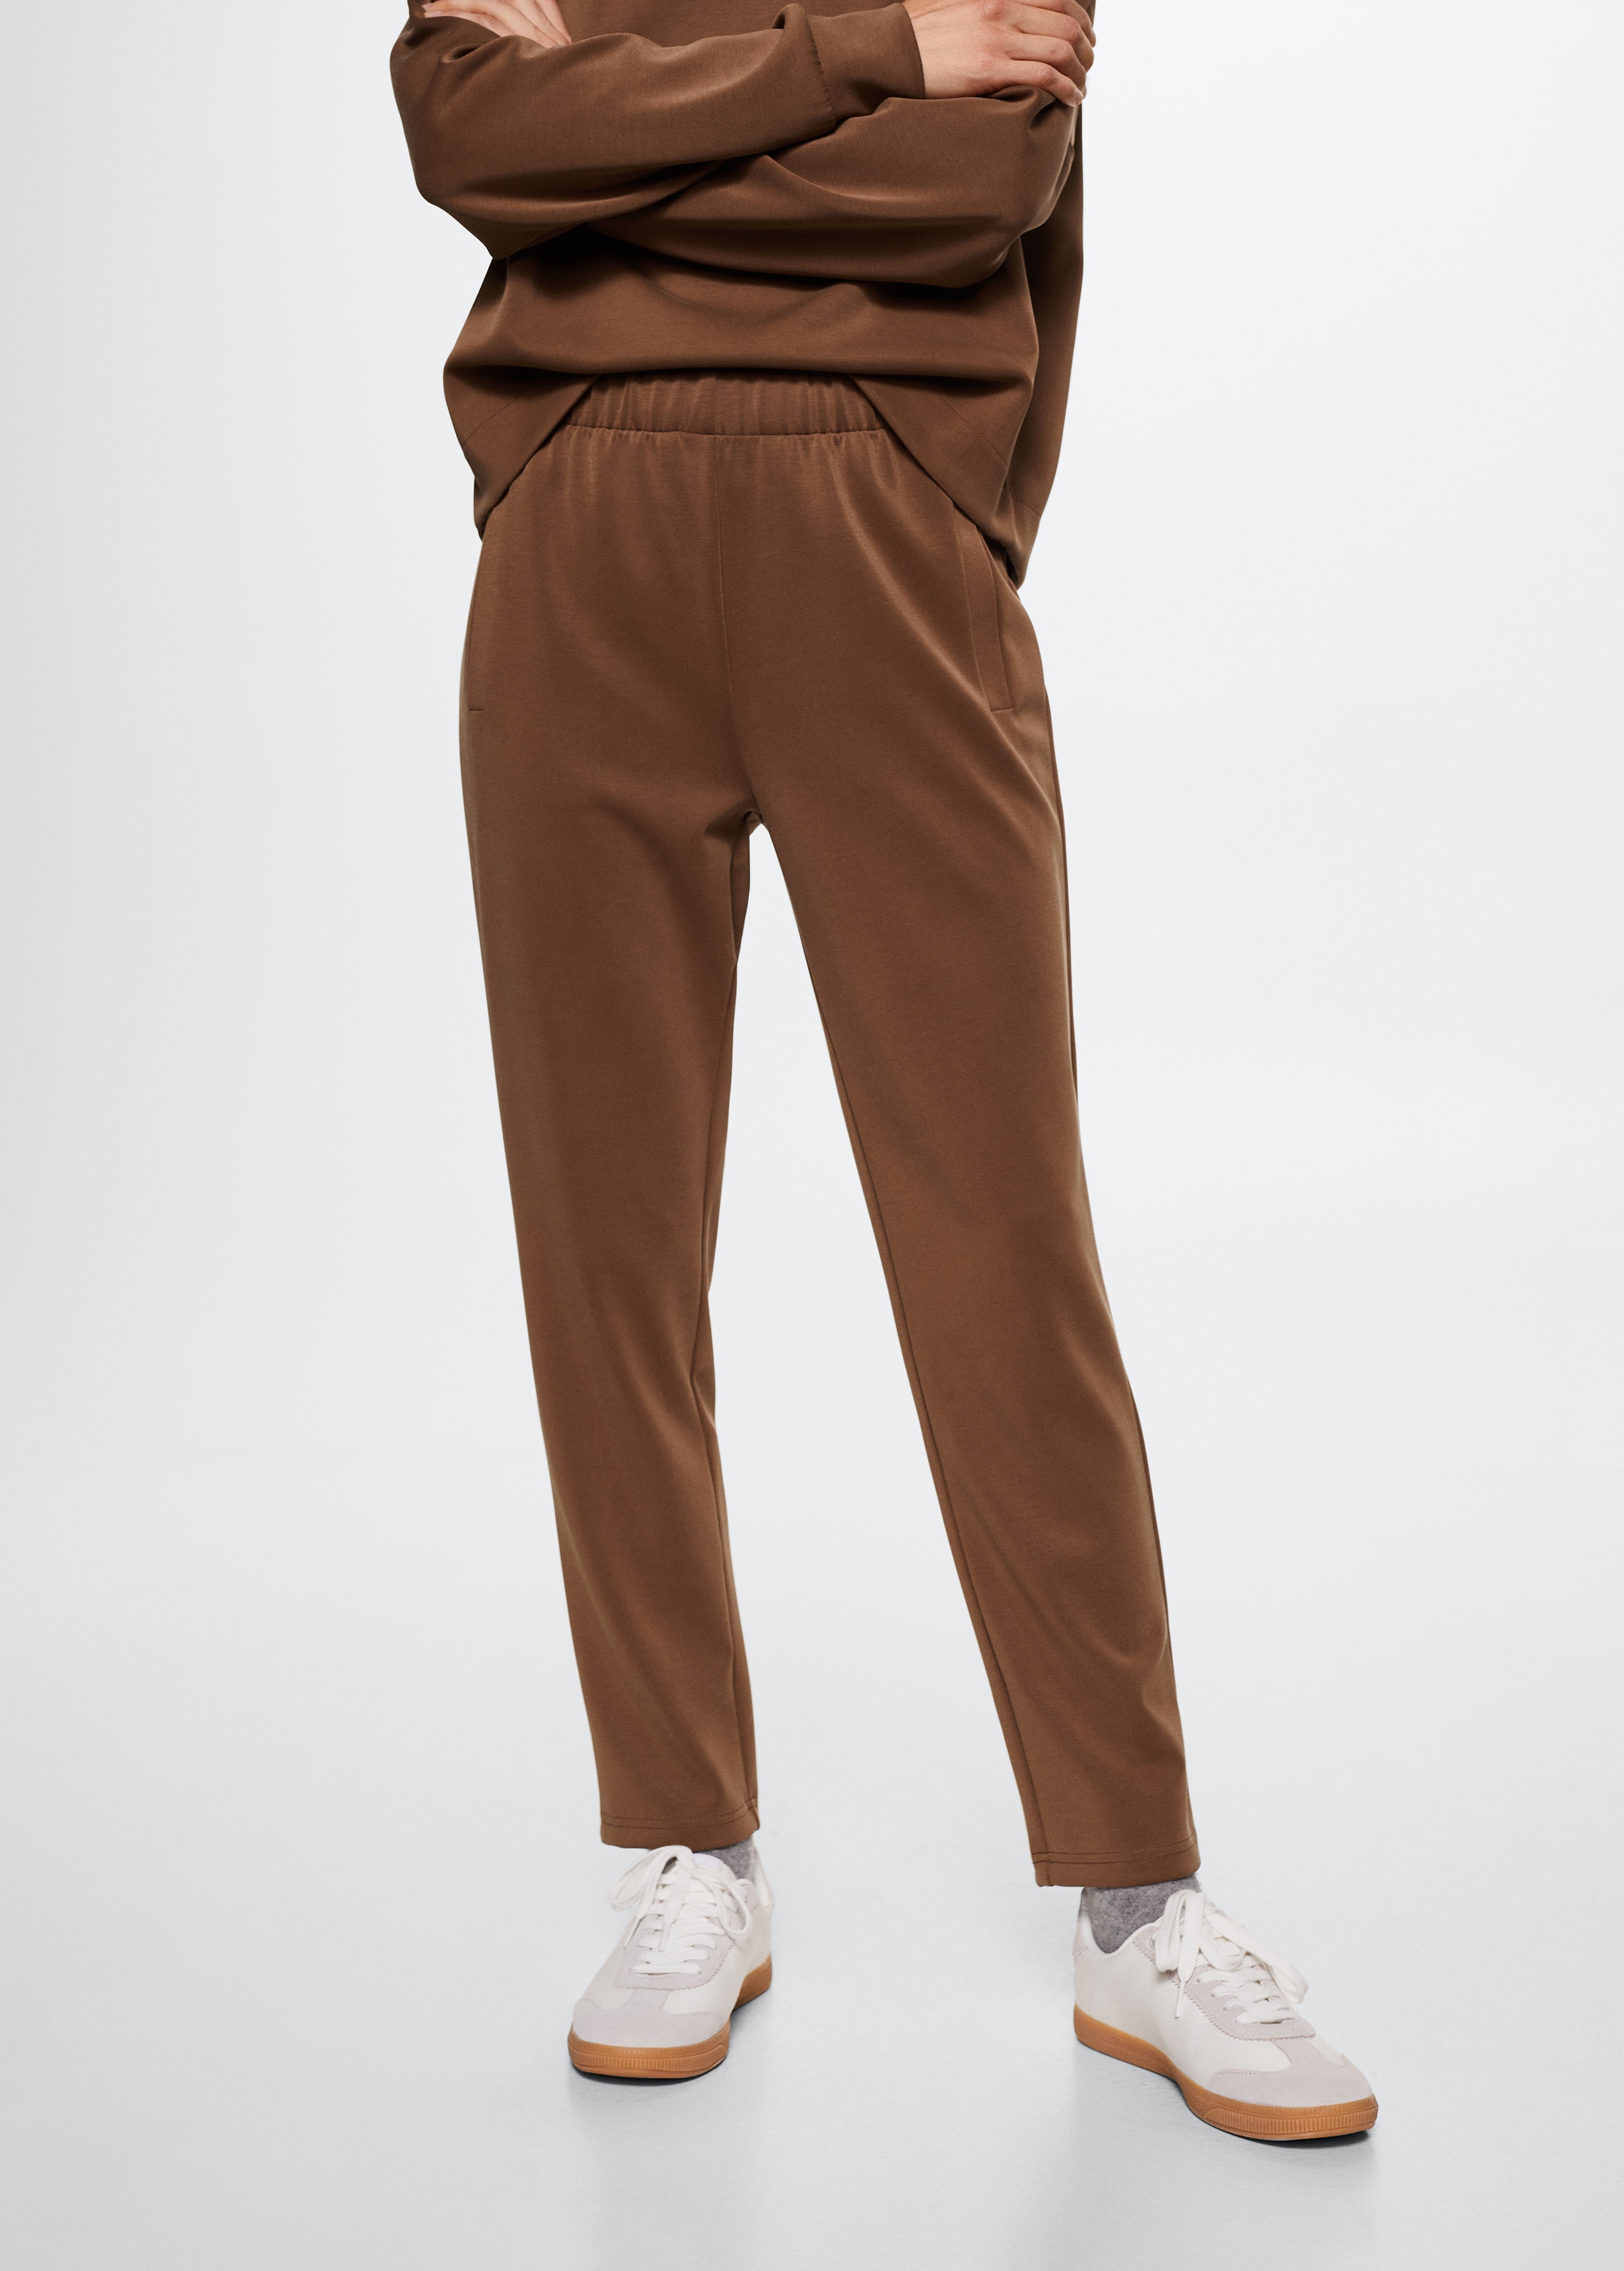 Pocket jogger trousers - Medium plane